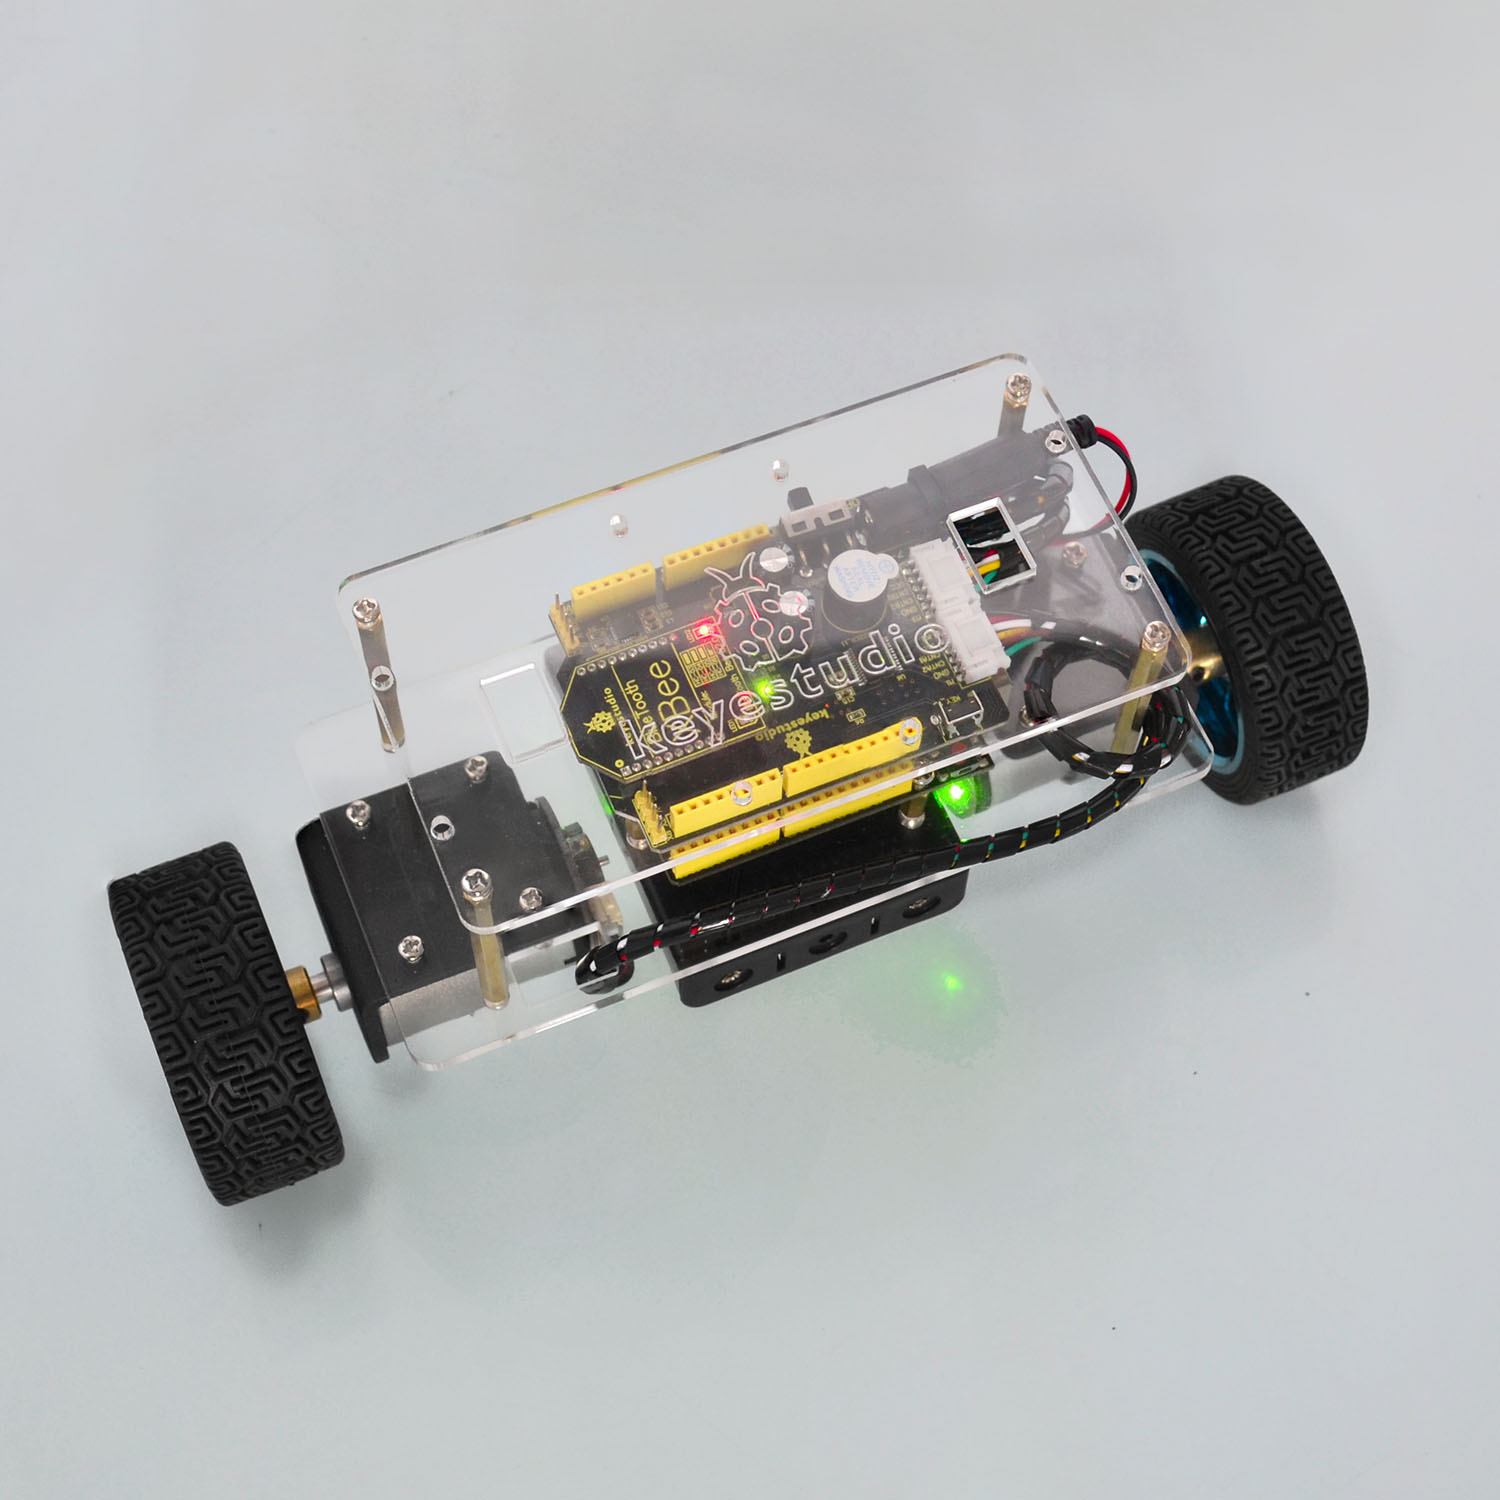 Kit Robô carro-casa STEAM (Android/IOS) Arduino Keyestudio – ABC